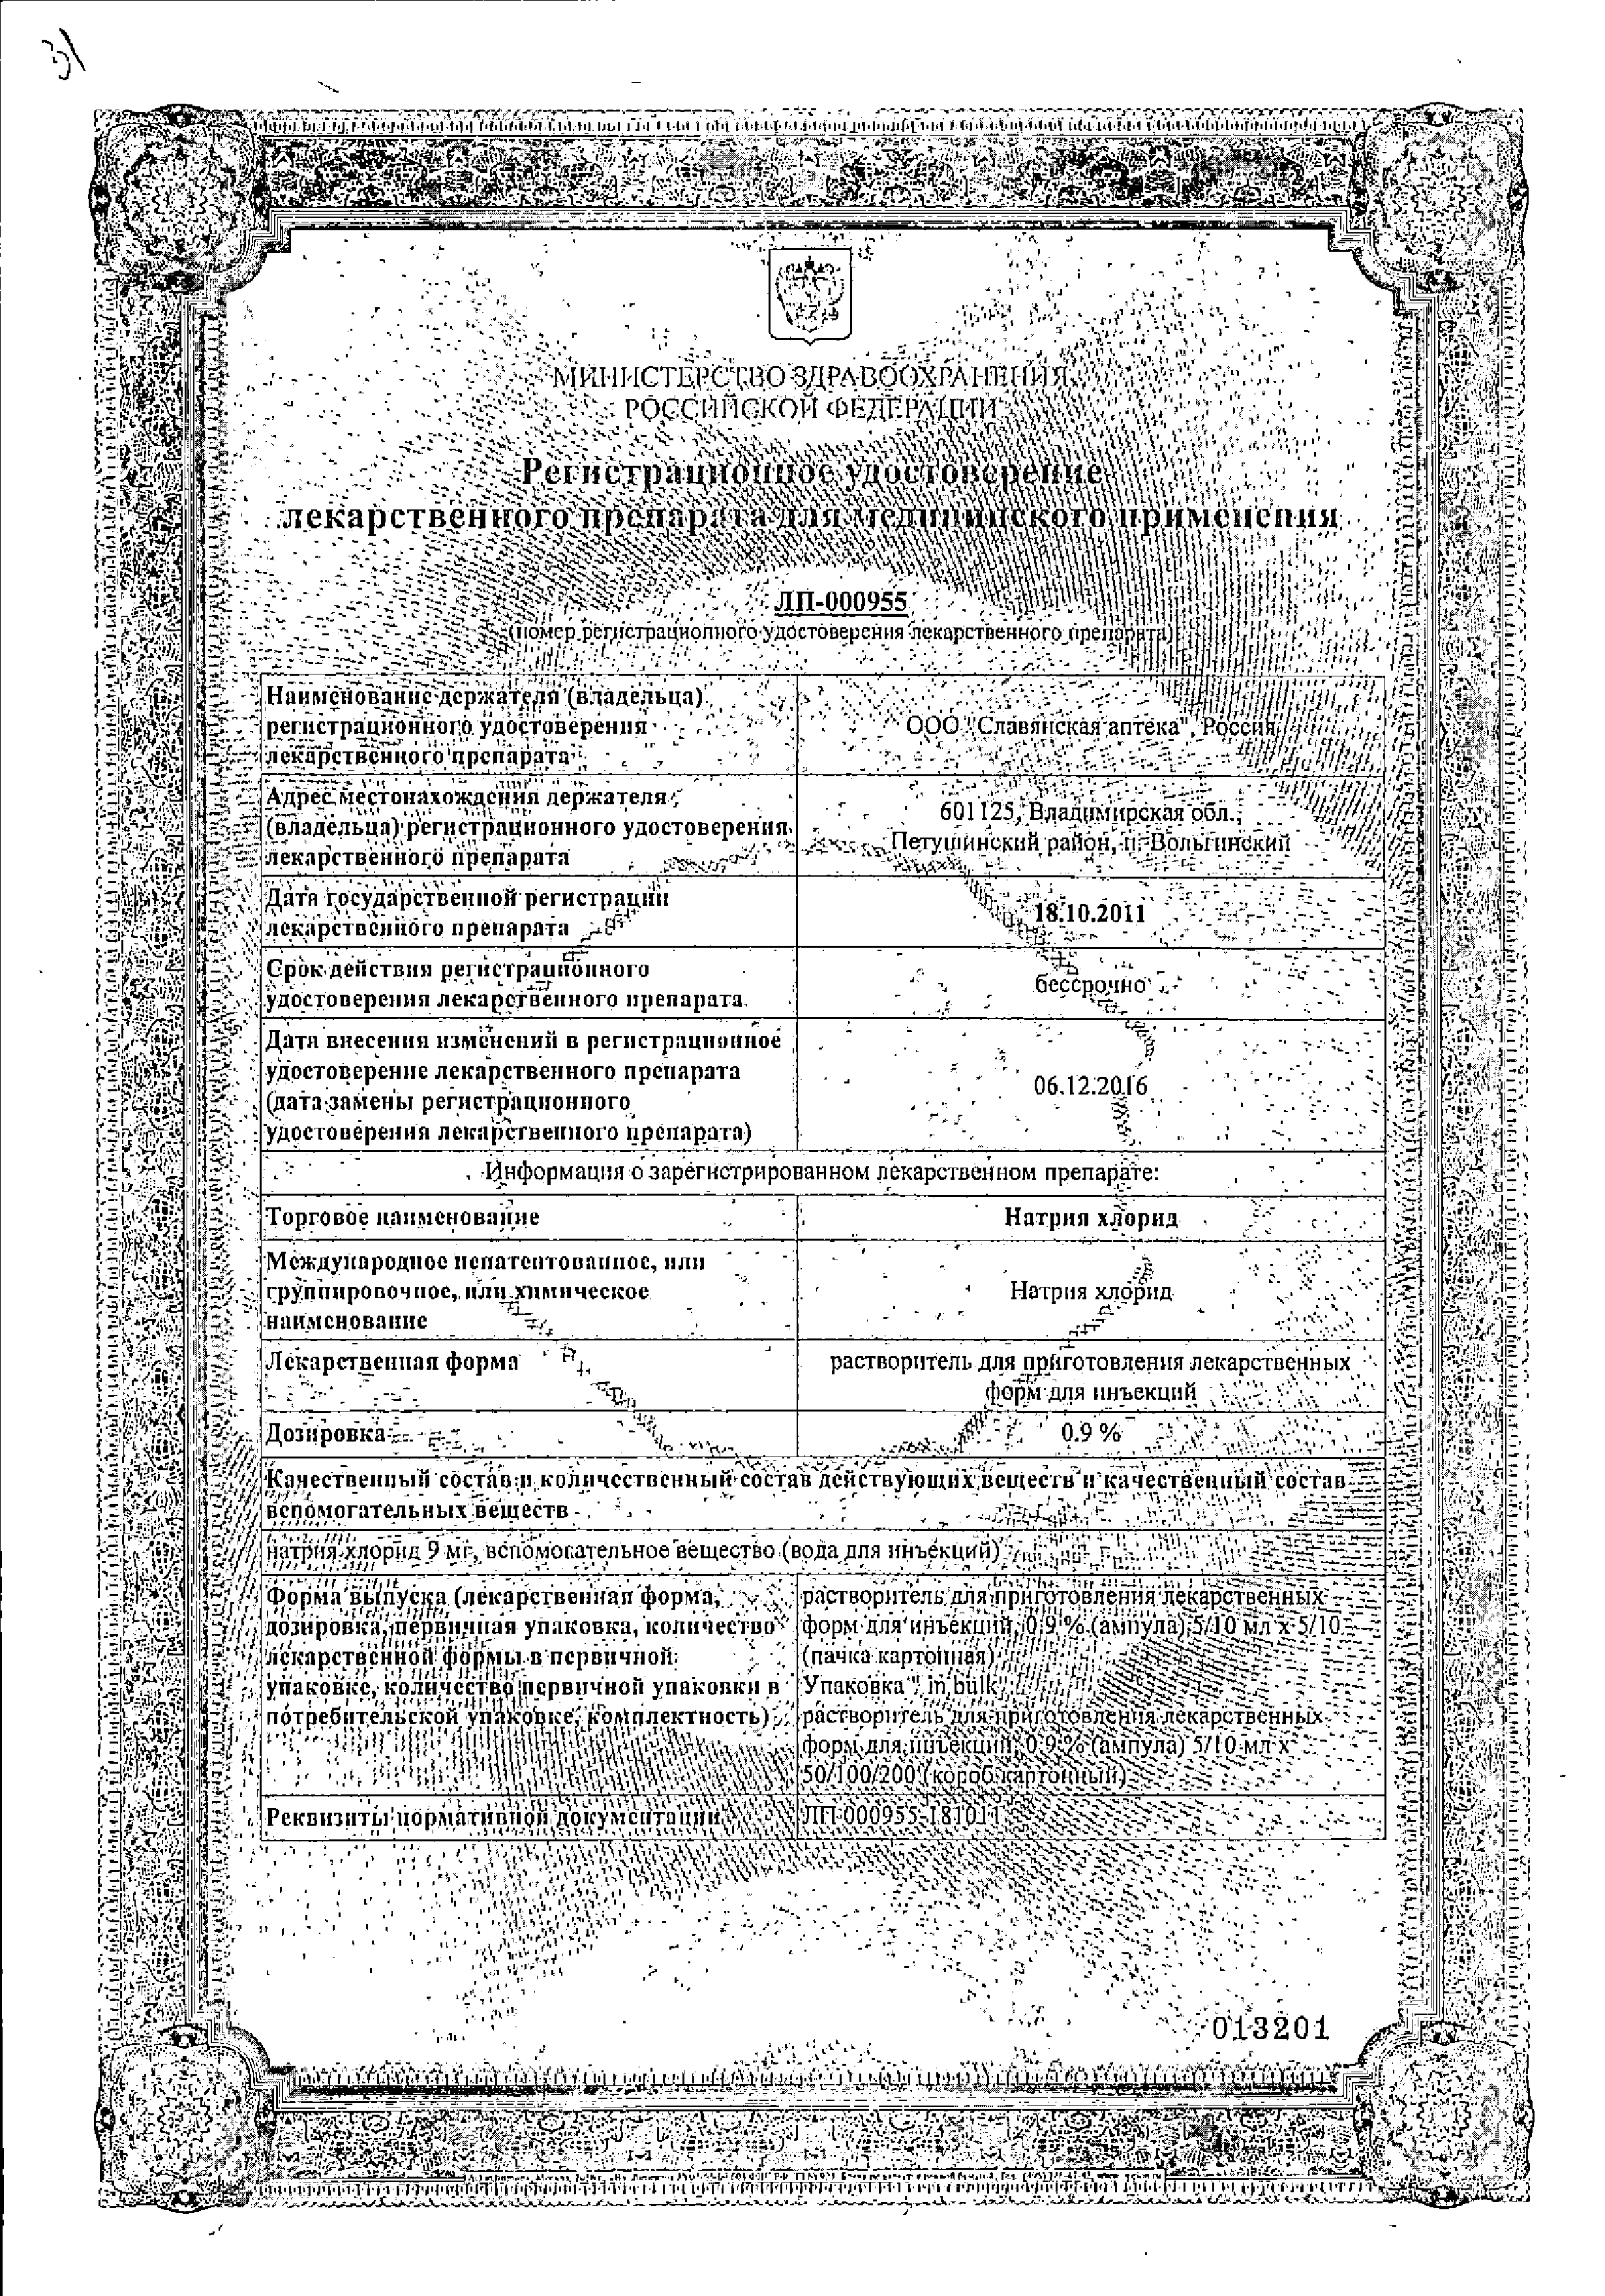 Натрия хлорид (для инъекций) сертификат